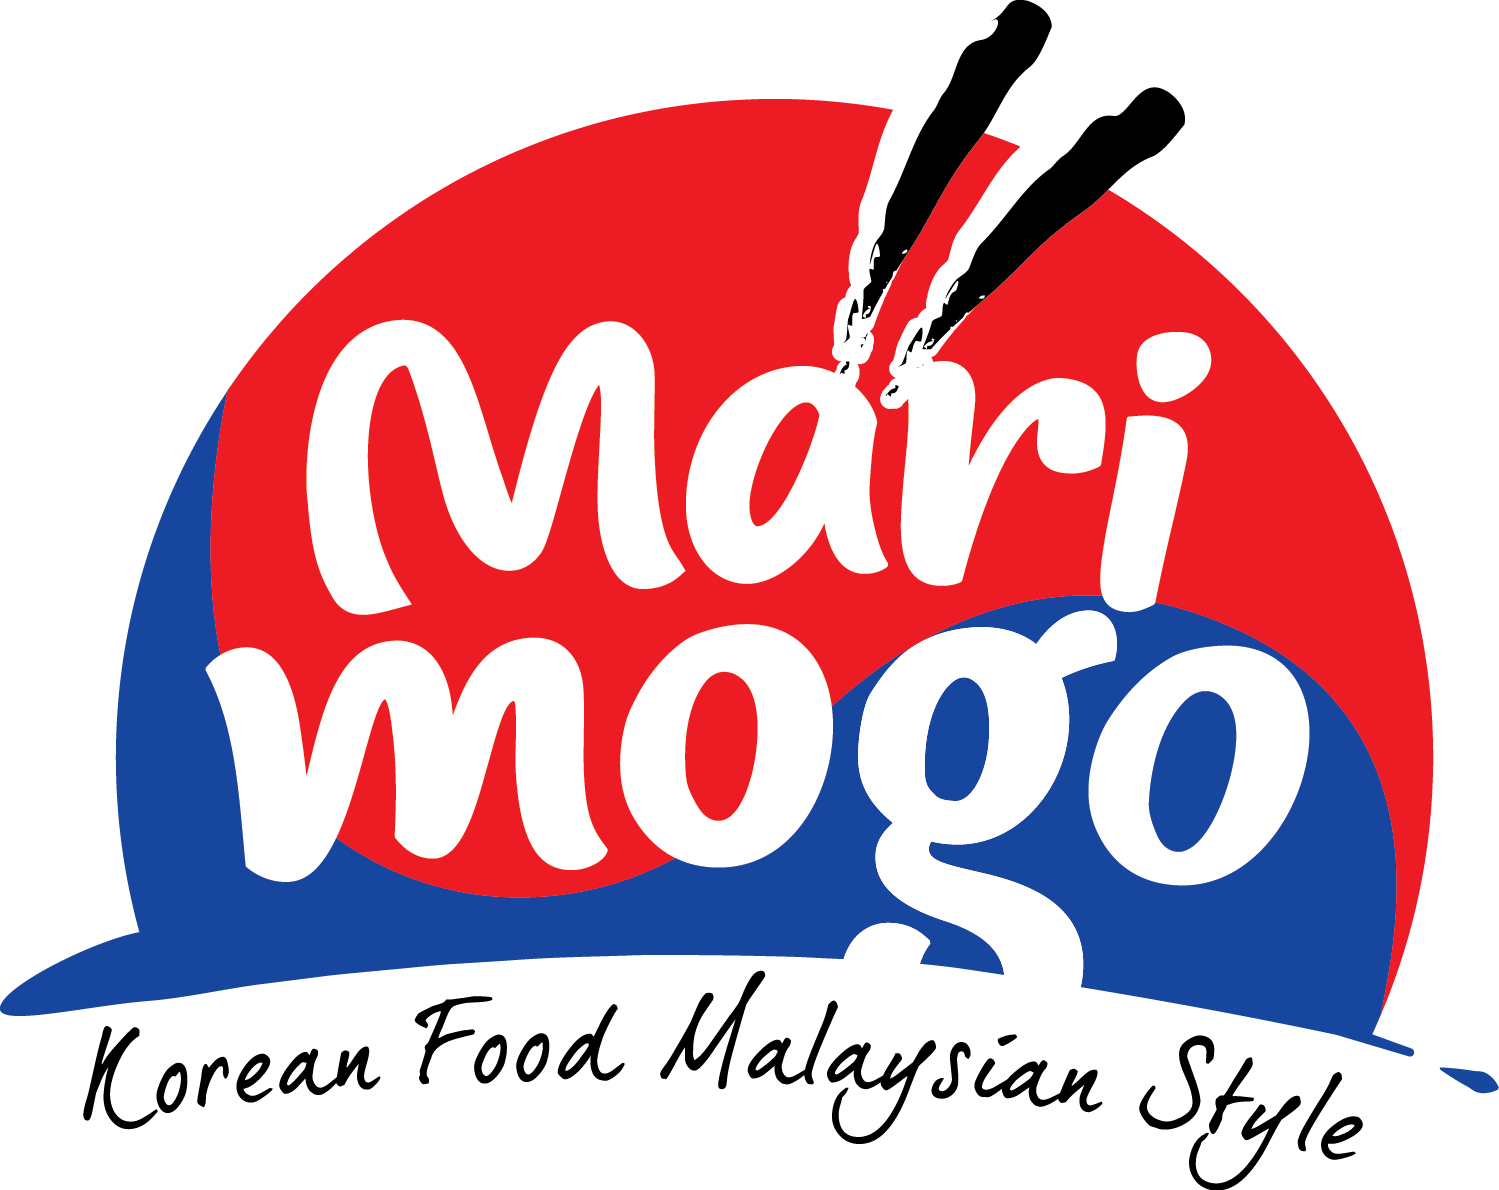 All Products – MariMogo - Korean Food Malaysian Style